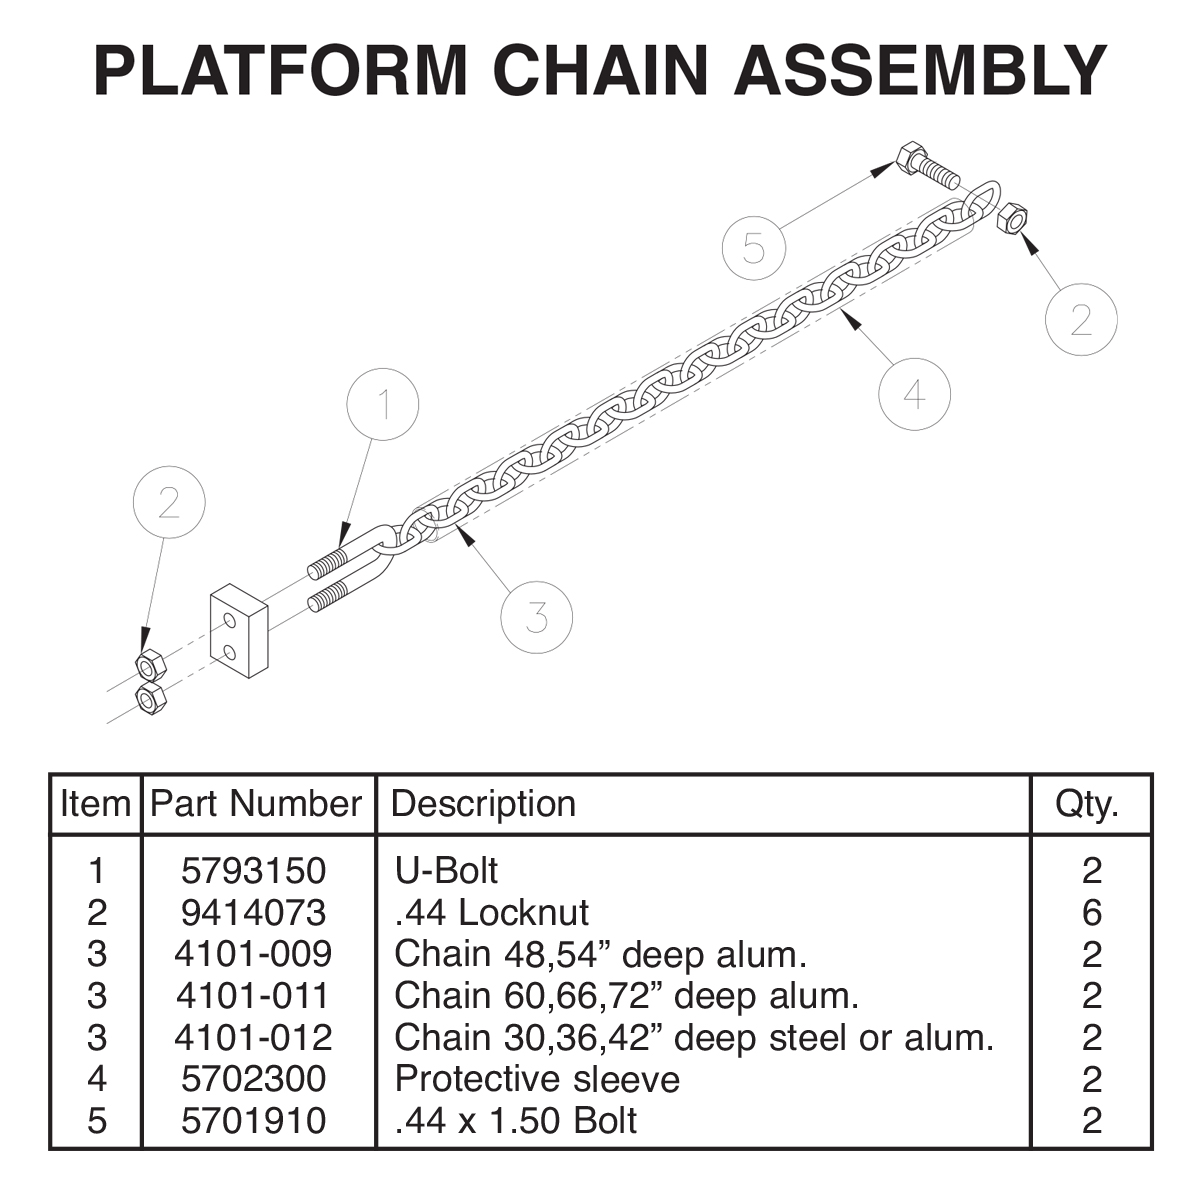 TVLR 20/20A Platform Chain Assembly Diagram